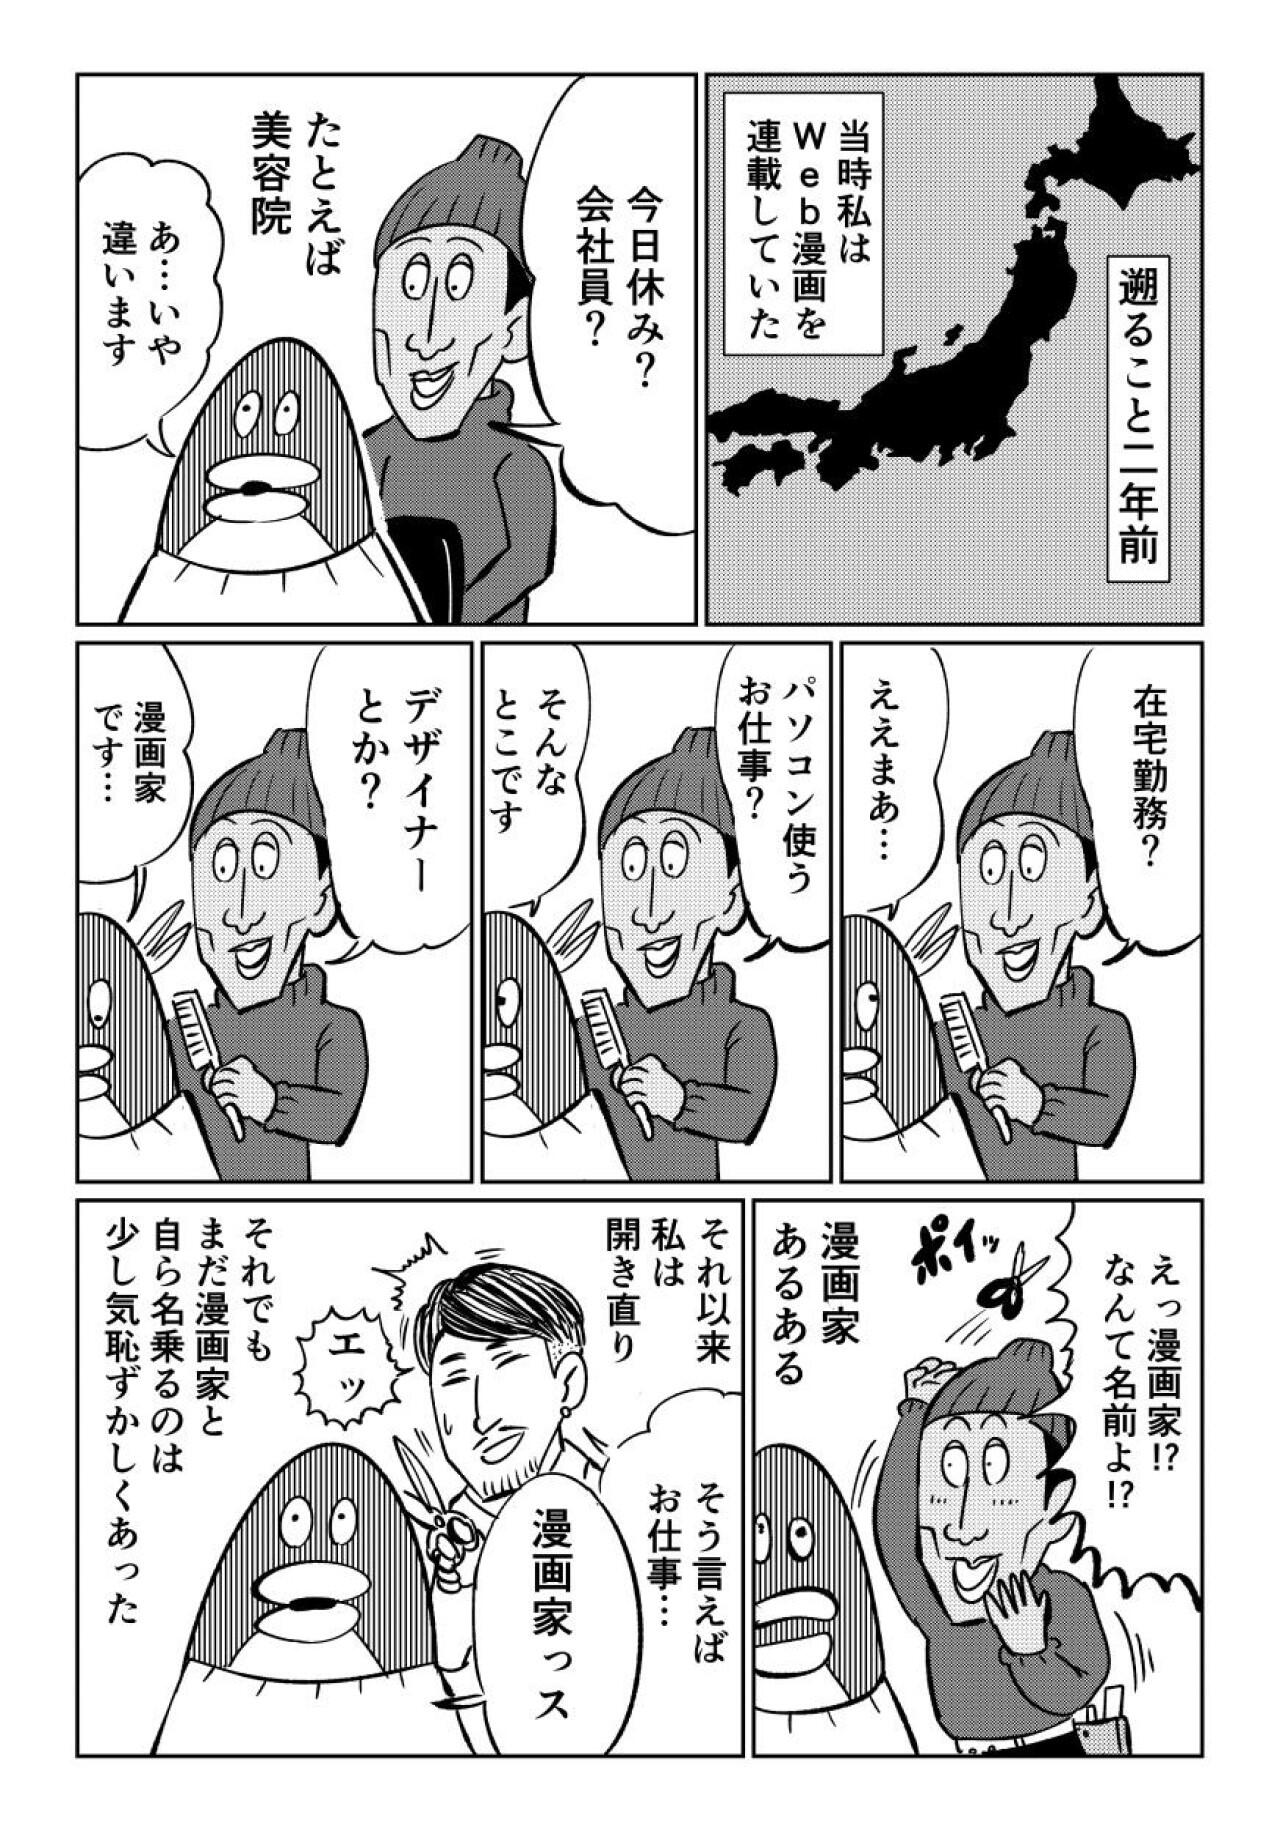 https://www.ryugaku.co.jp/column/images/34sai9_2_1280.jpg